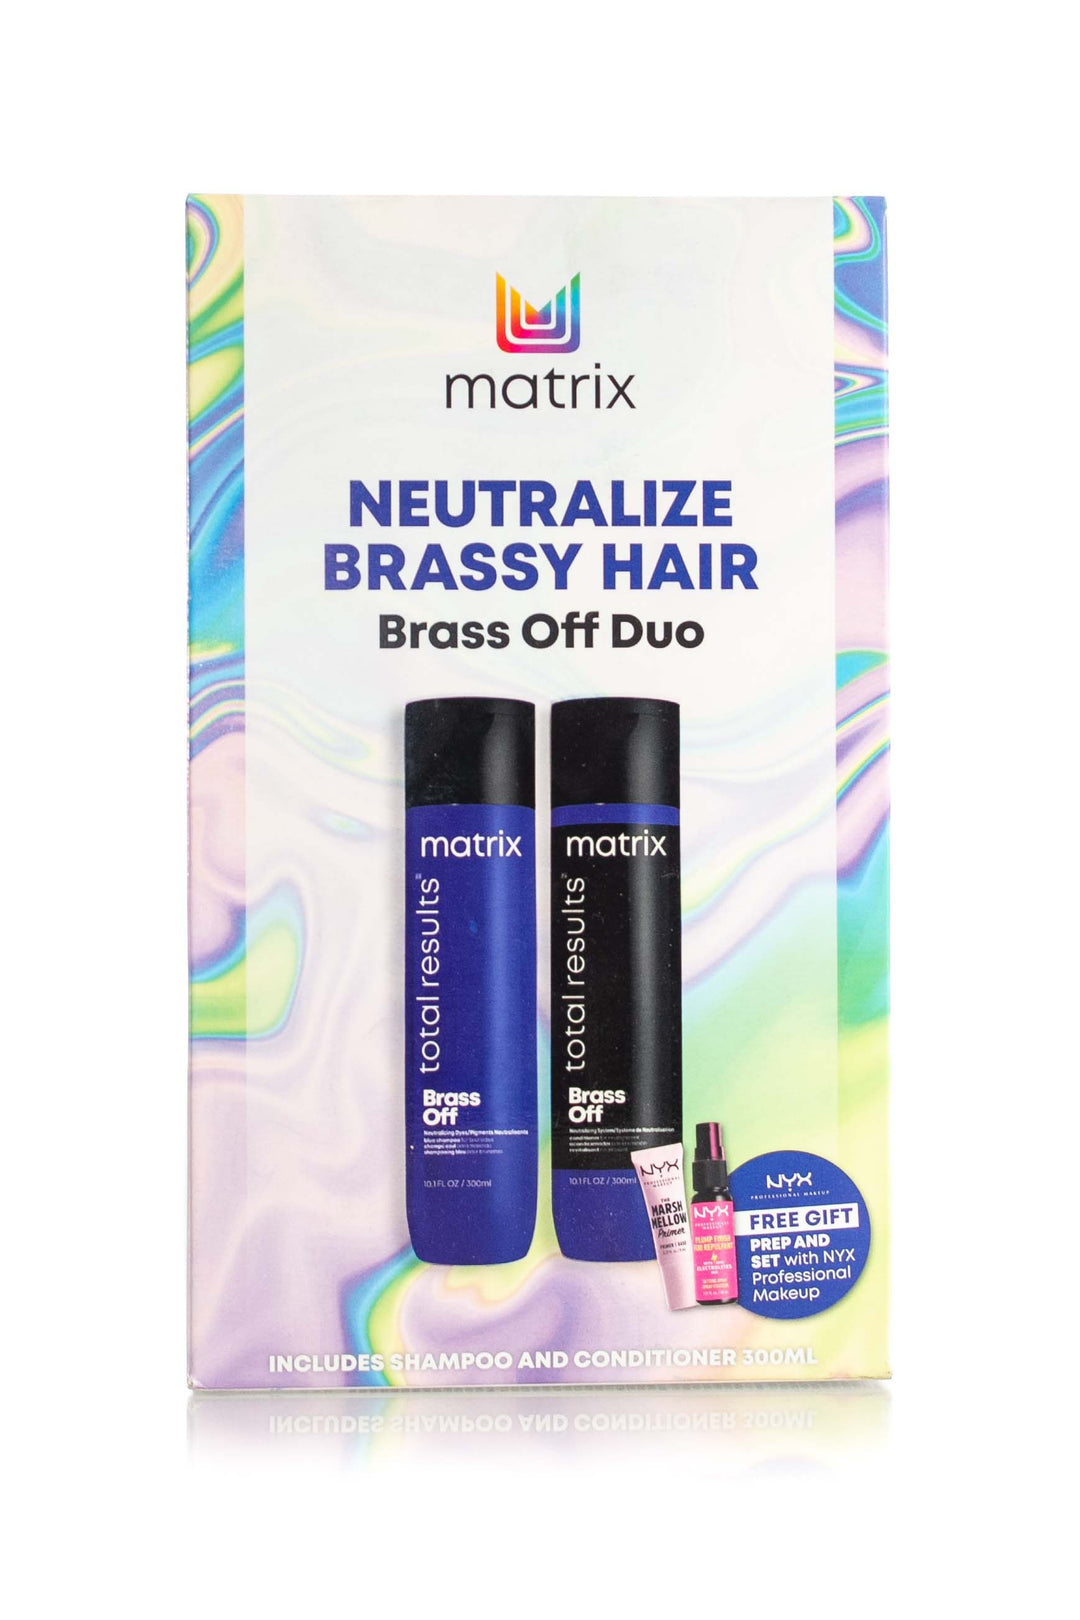 MATRIX Neutralize Brassy Hair Brass Off Duo | 300ml